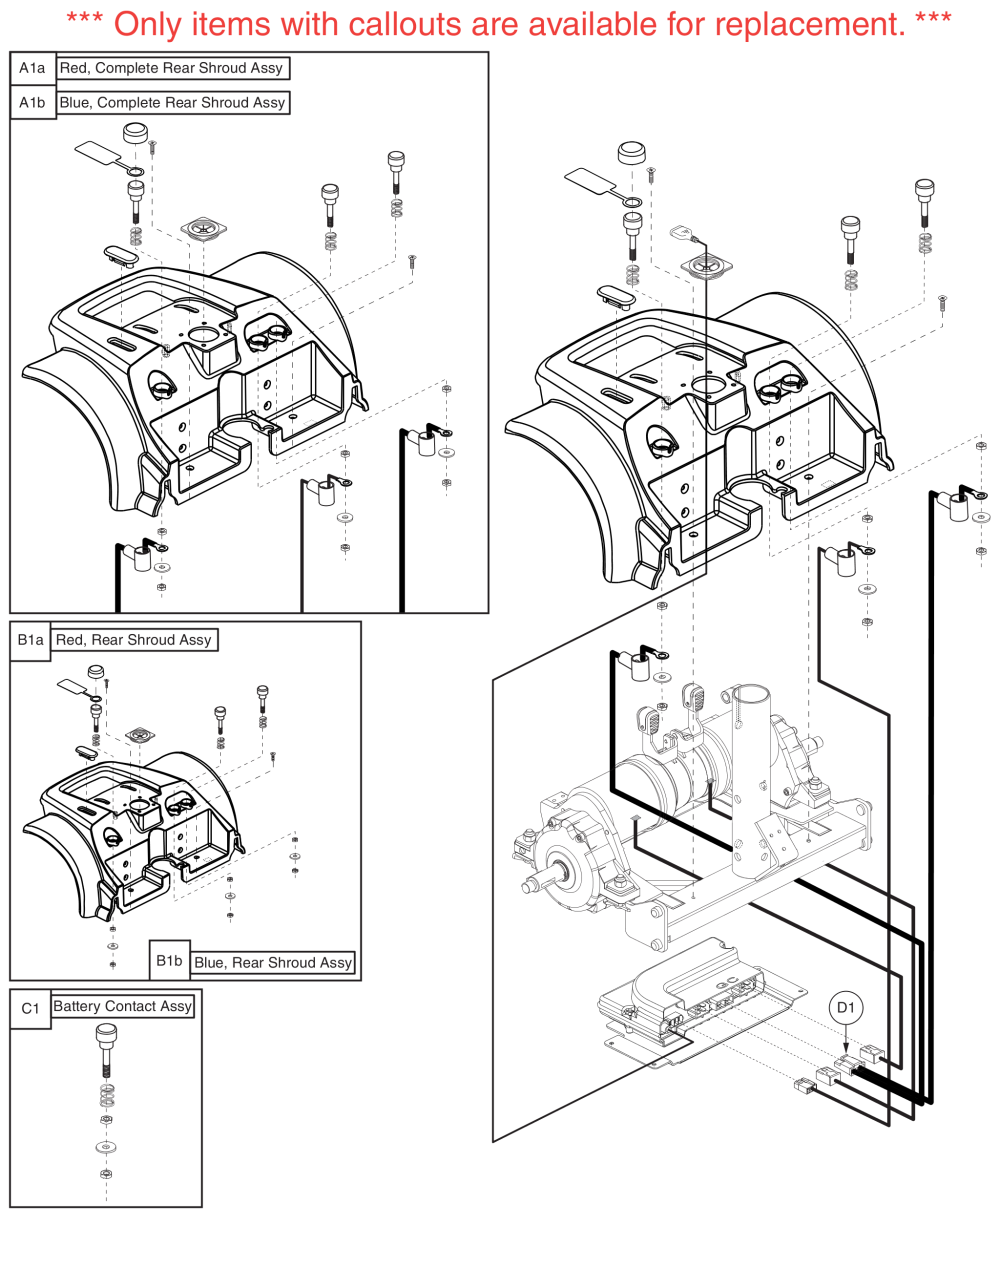 Rear Shroud Assy, Gc (version 2) Go-chair / Z-chair parts diagram